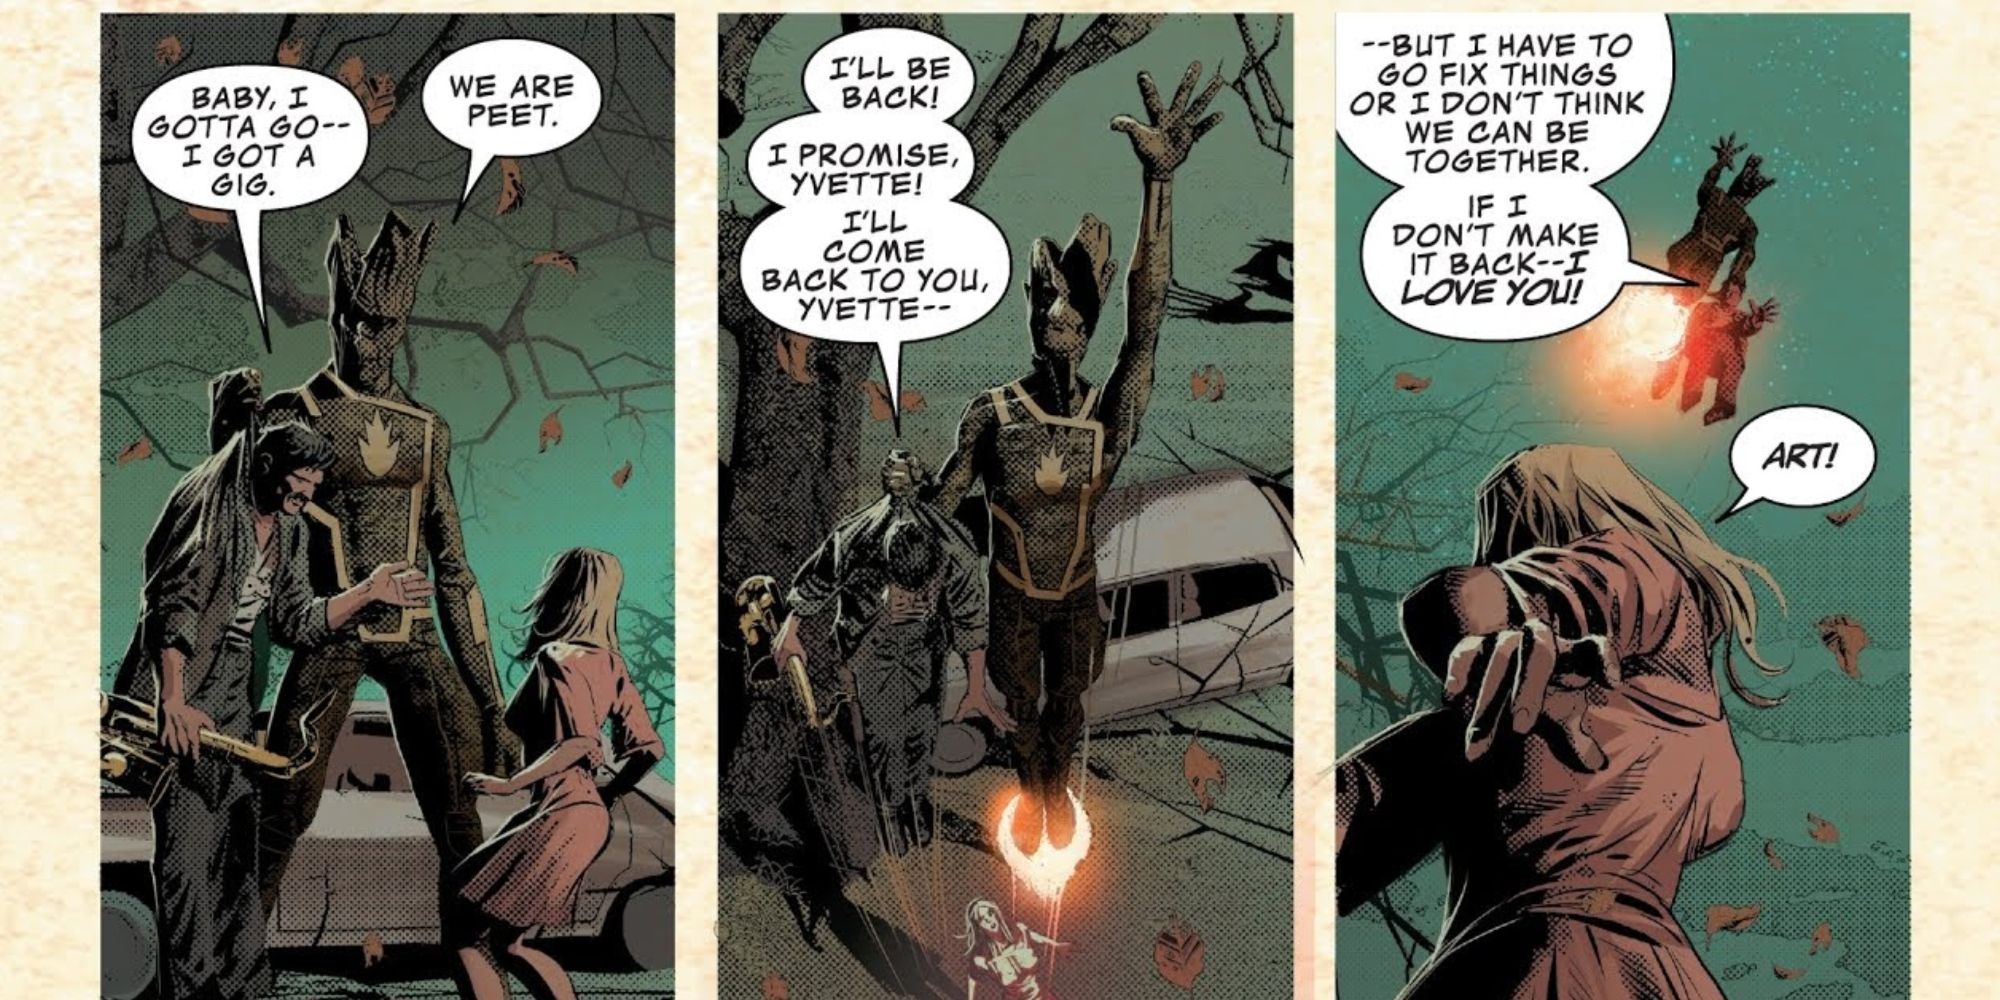 Peet emerges in Infinity Warps #5 comic.